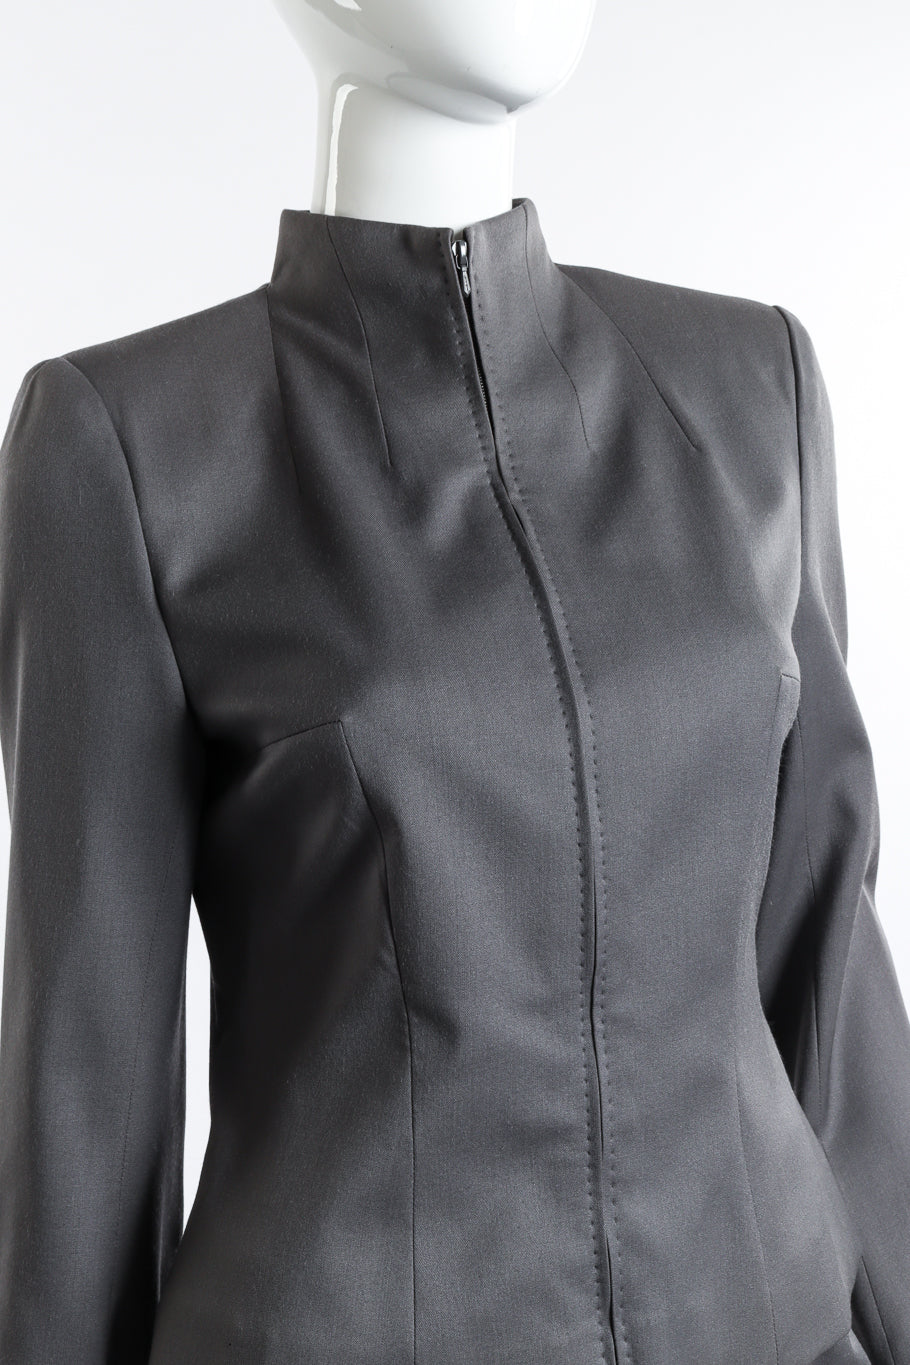 Vintage Givenchy 1999 F/W Circuit Board Zip Up Jacket & Skirt Set jacket front on mannequin closeup @recess la